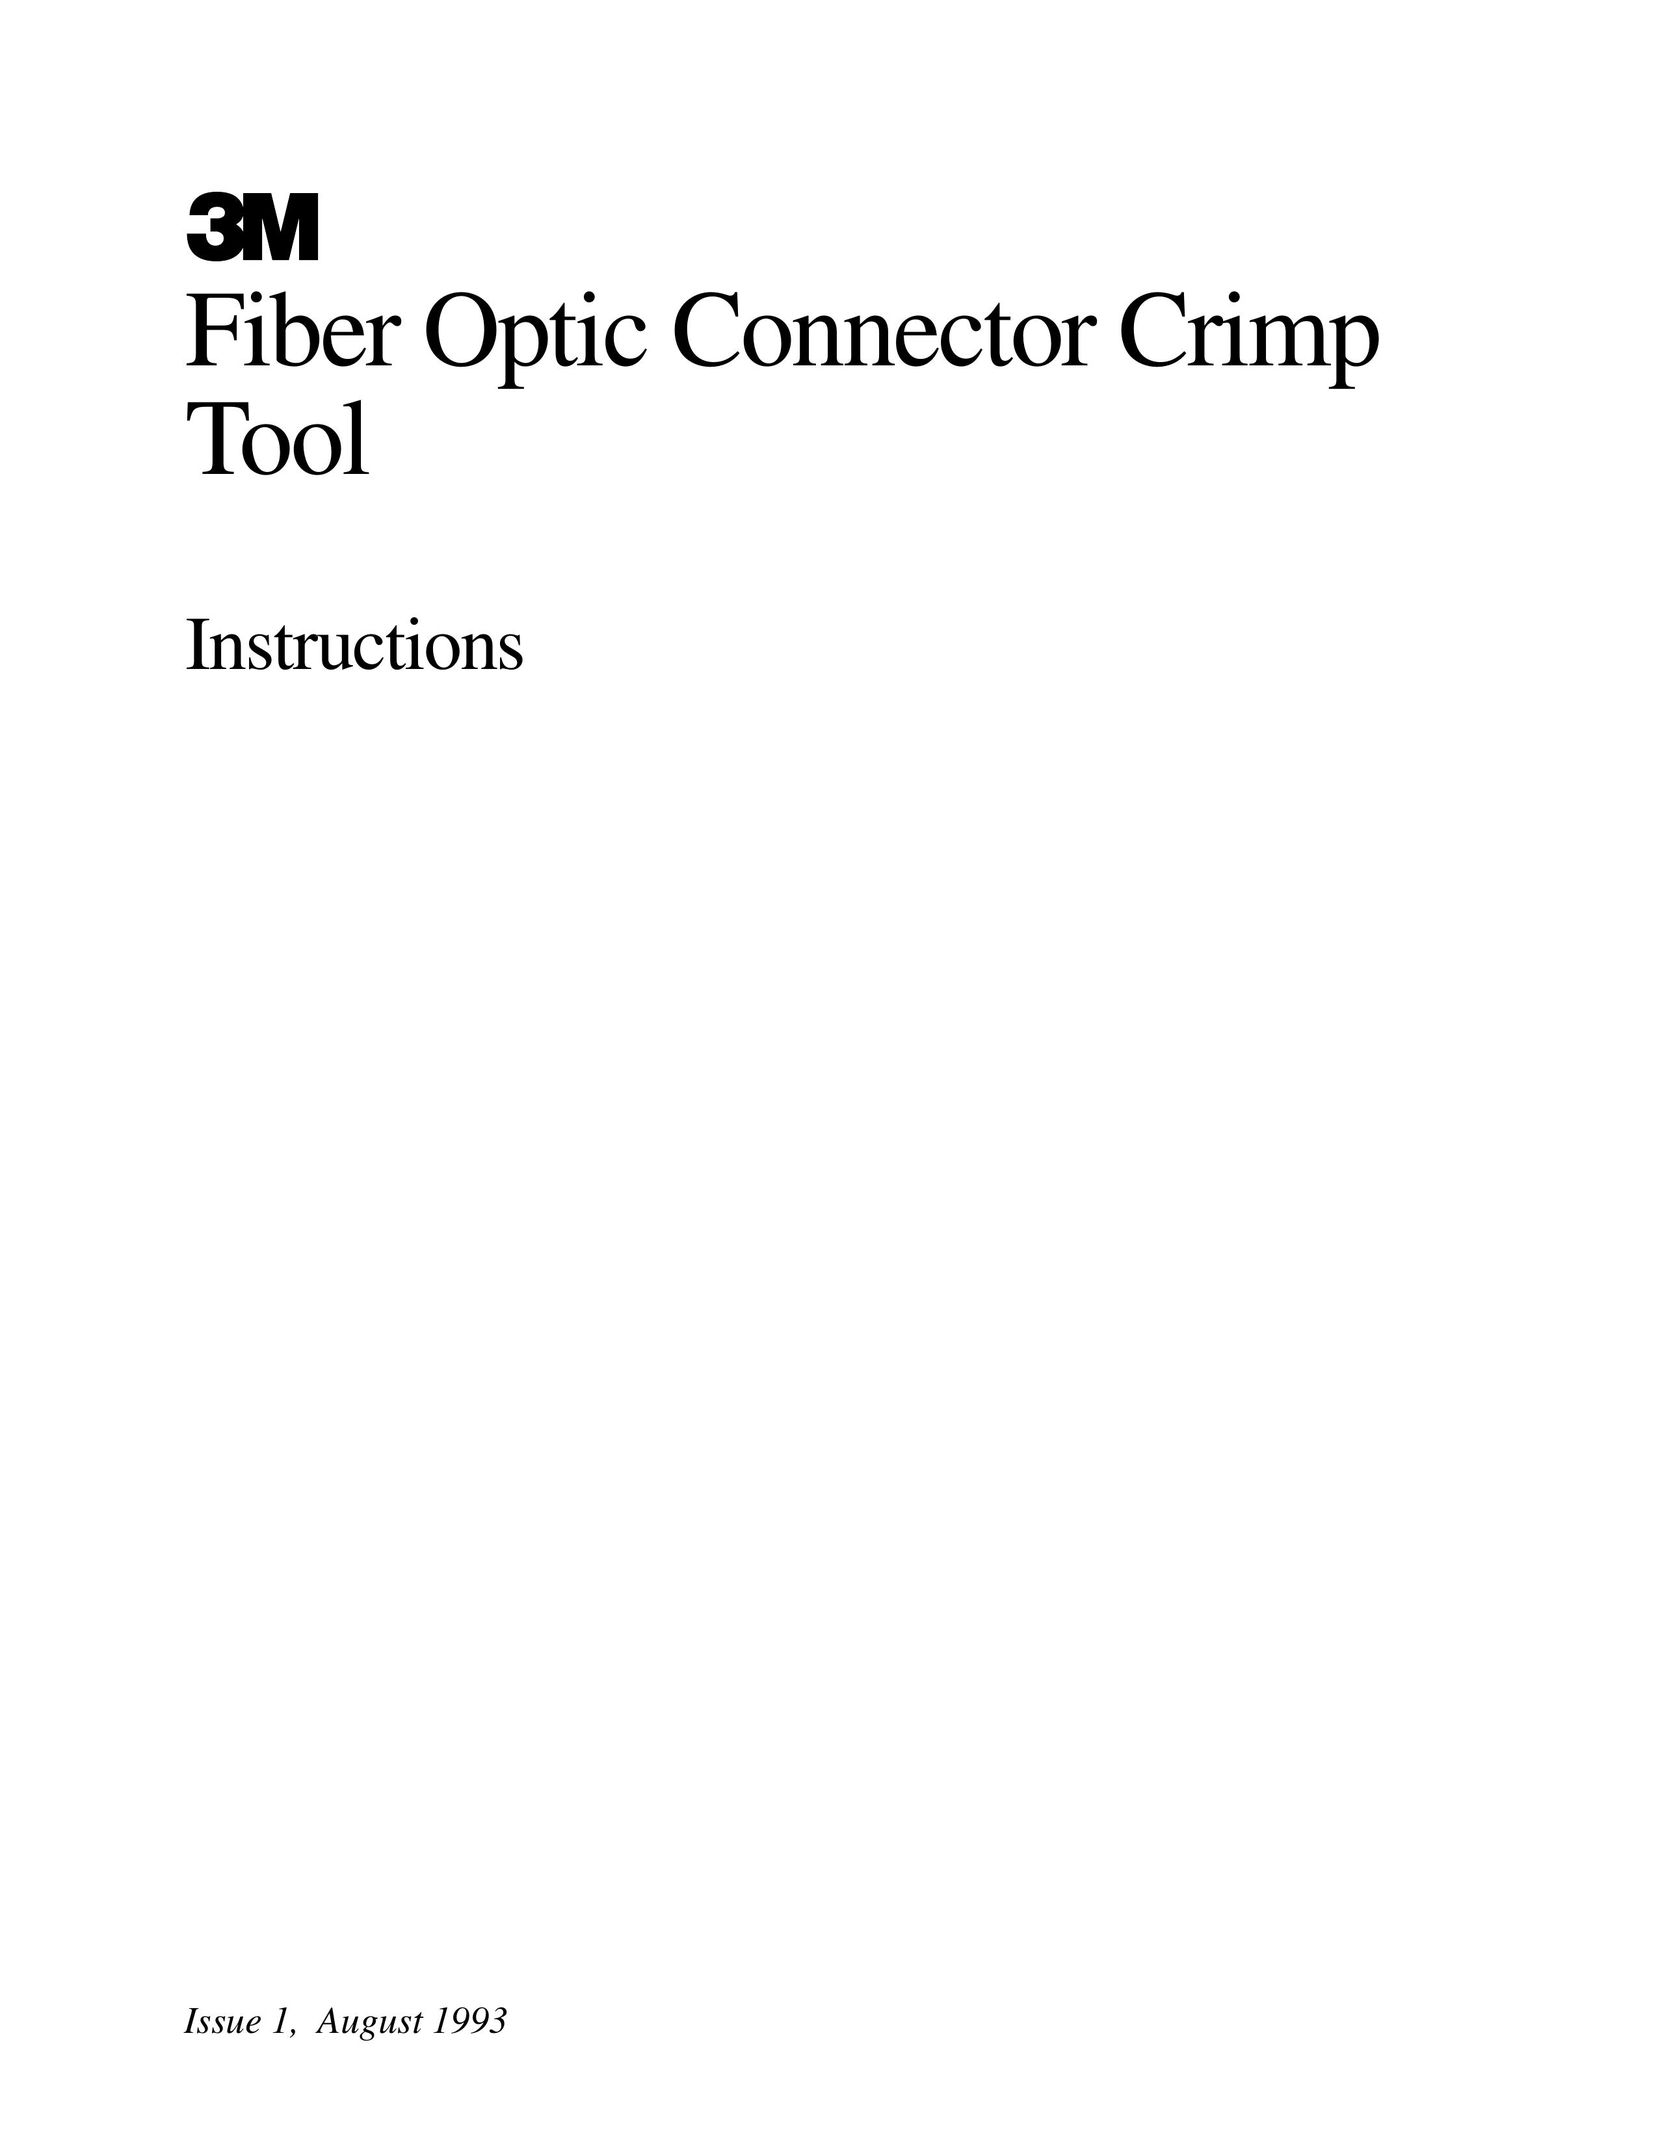 3M Fiber Optic Connector Crimp Tool Network Router User Manual